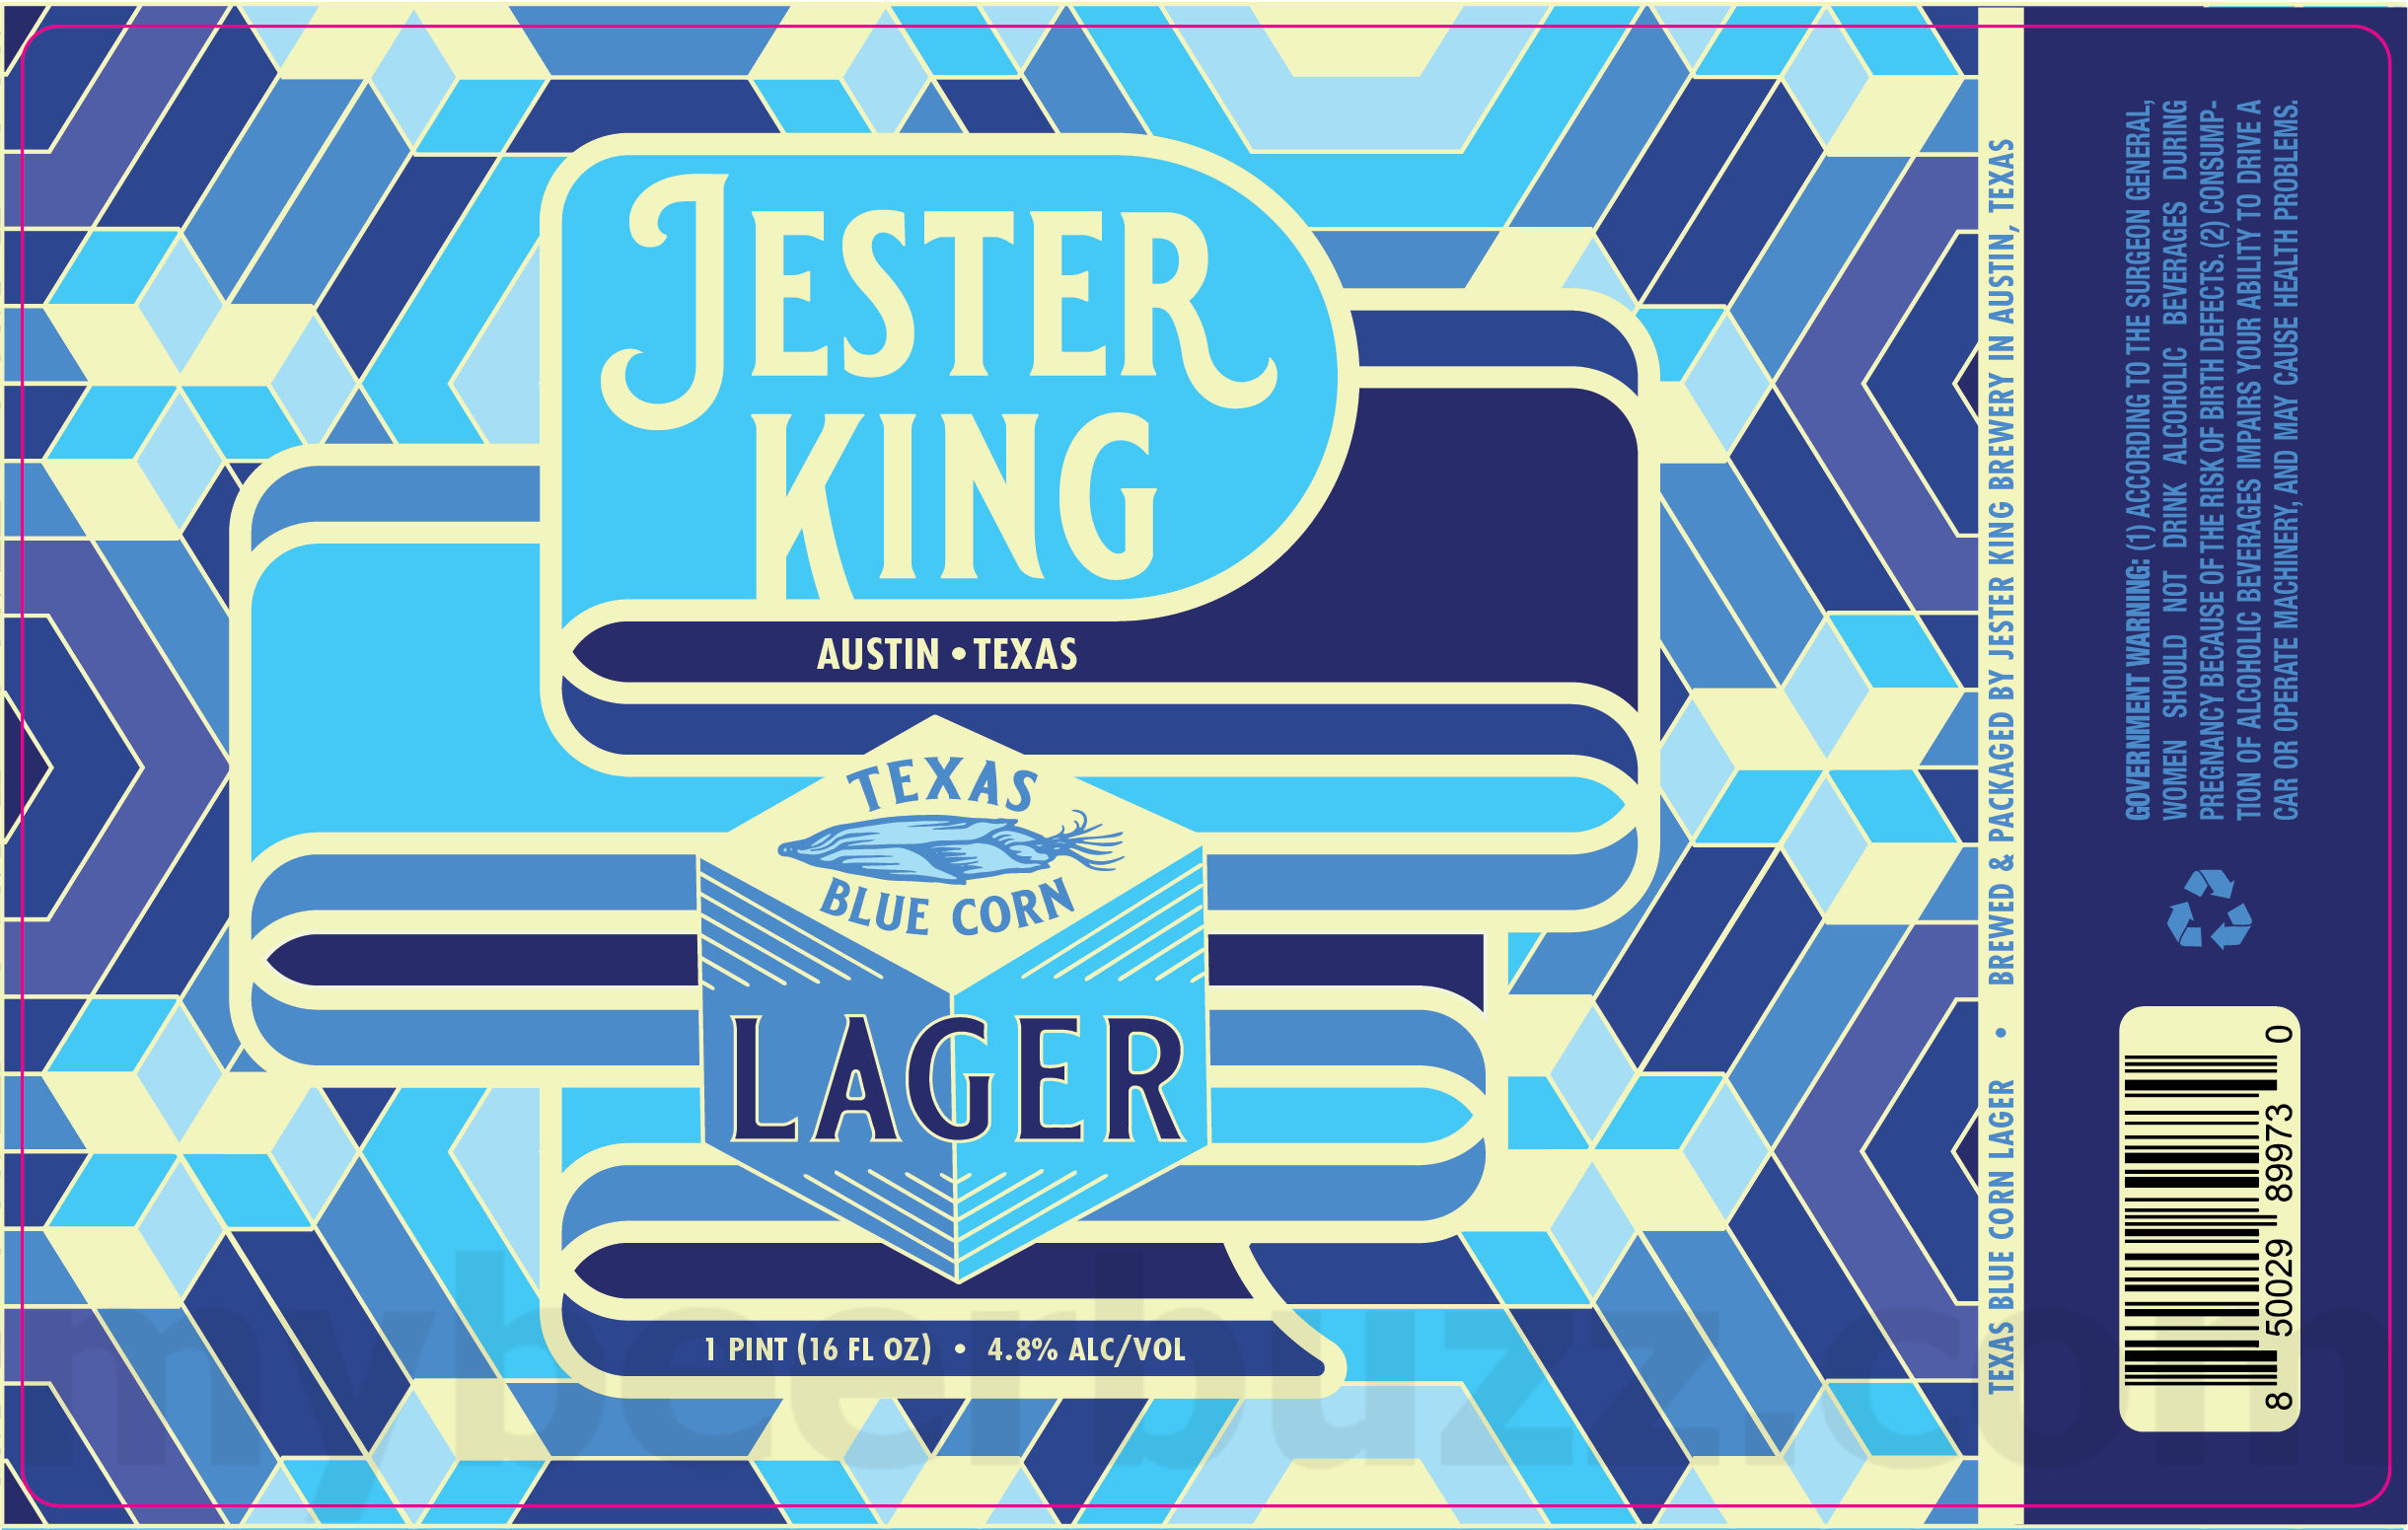 Jester King Adding Texas Blue Corn Lager